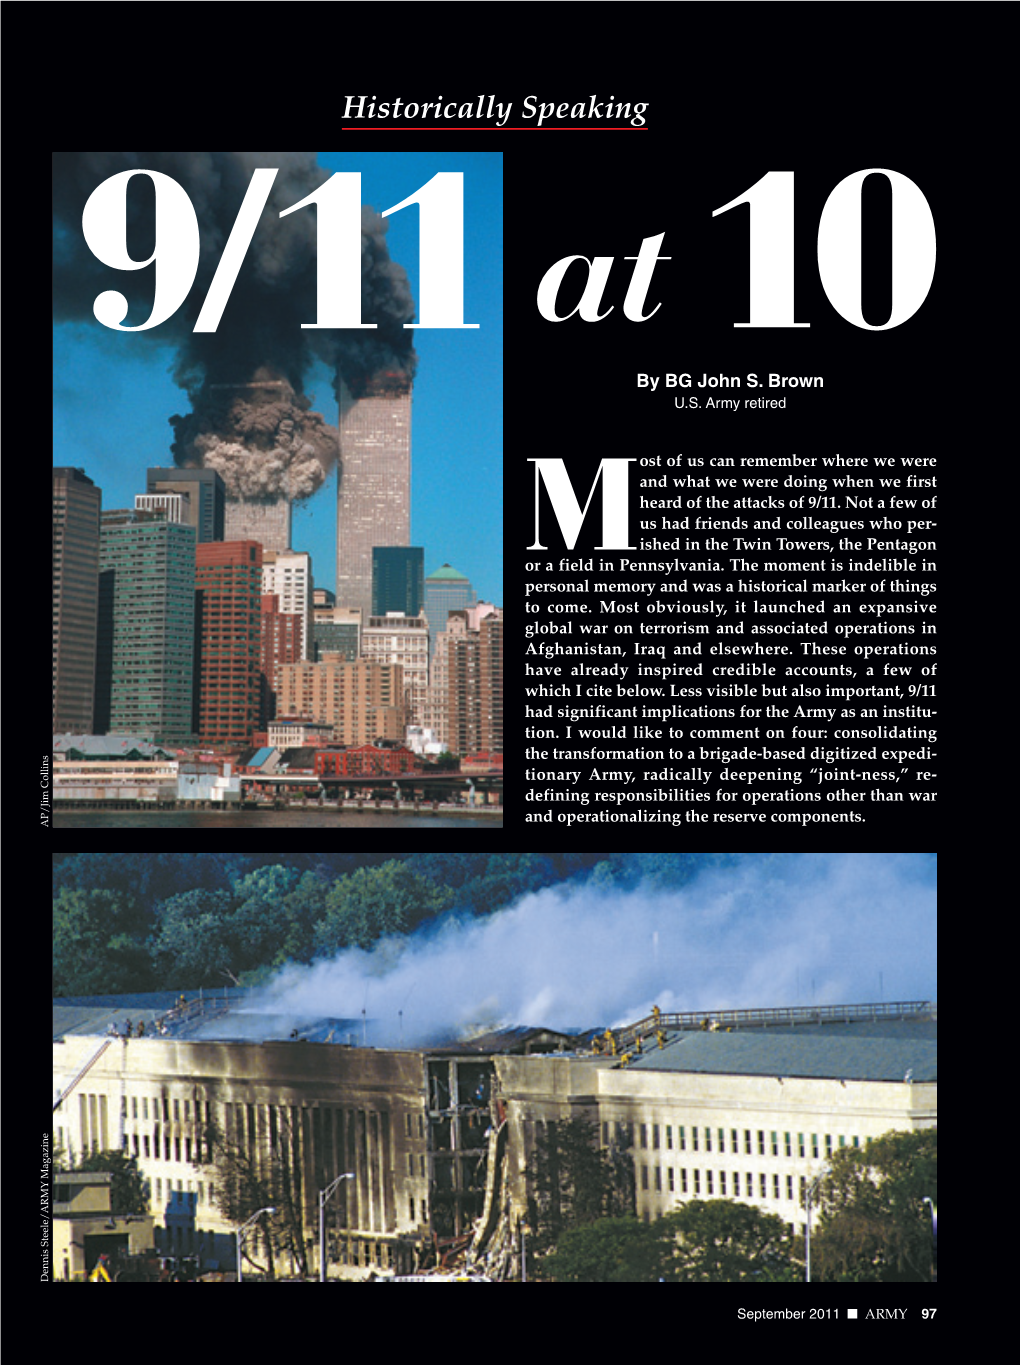 Historically Speaking 9/11 at 10 by BG John S